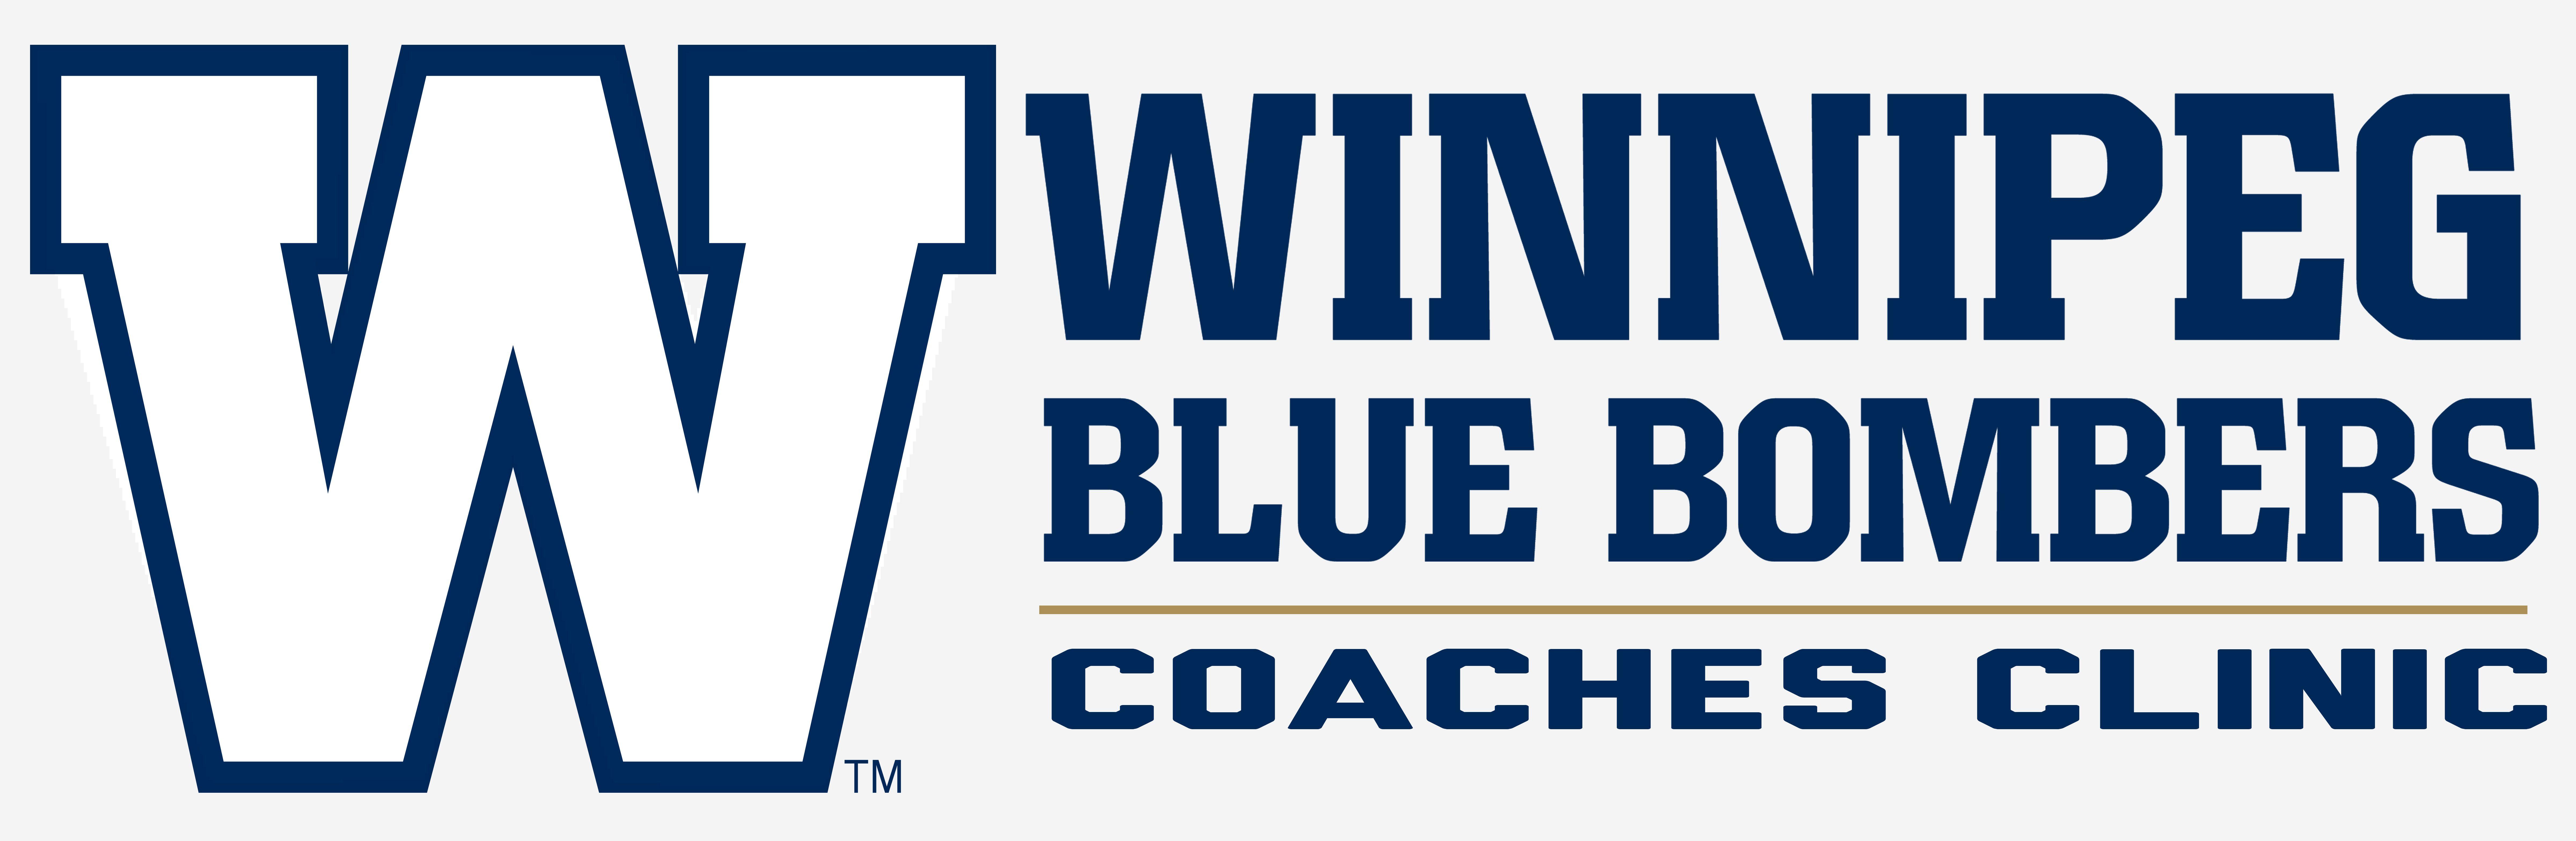 Winnipeg Blue Bombers Logo - Coaches Clinic - Winnipeg Blue Bombers